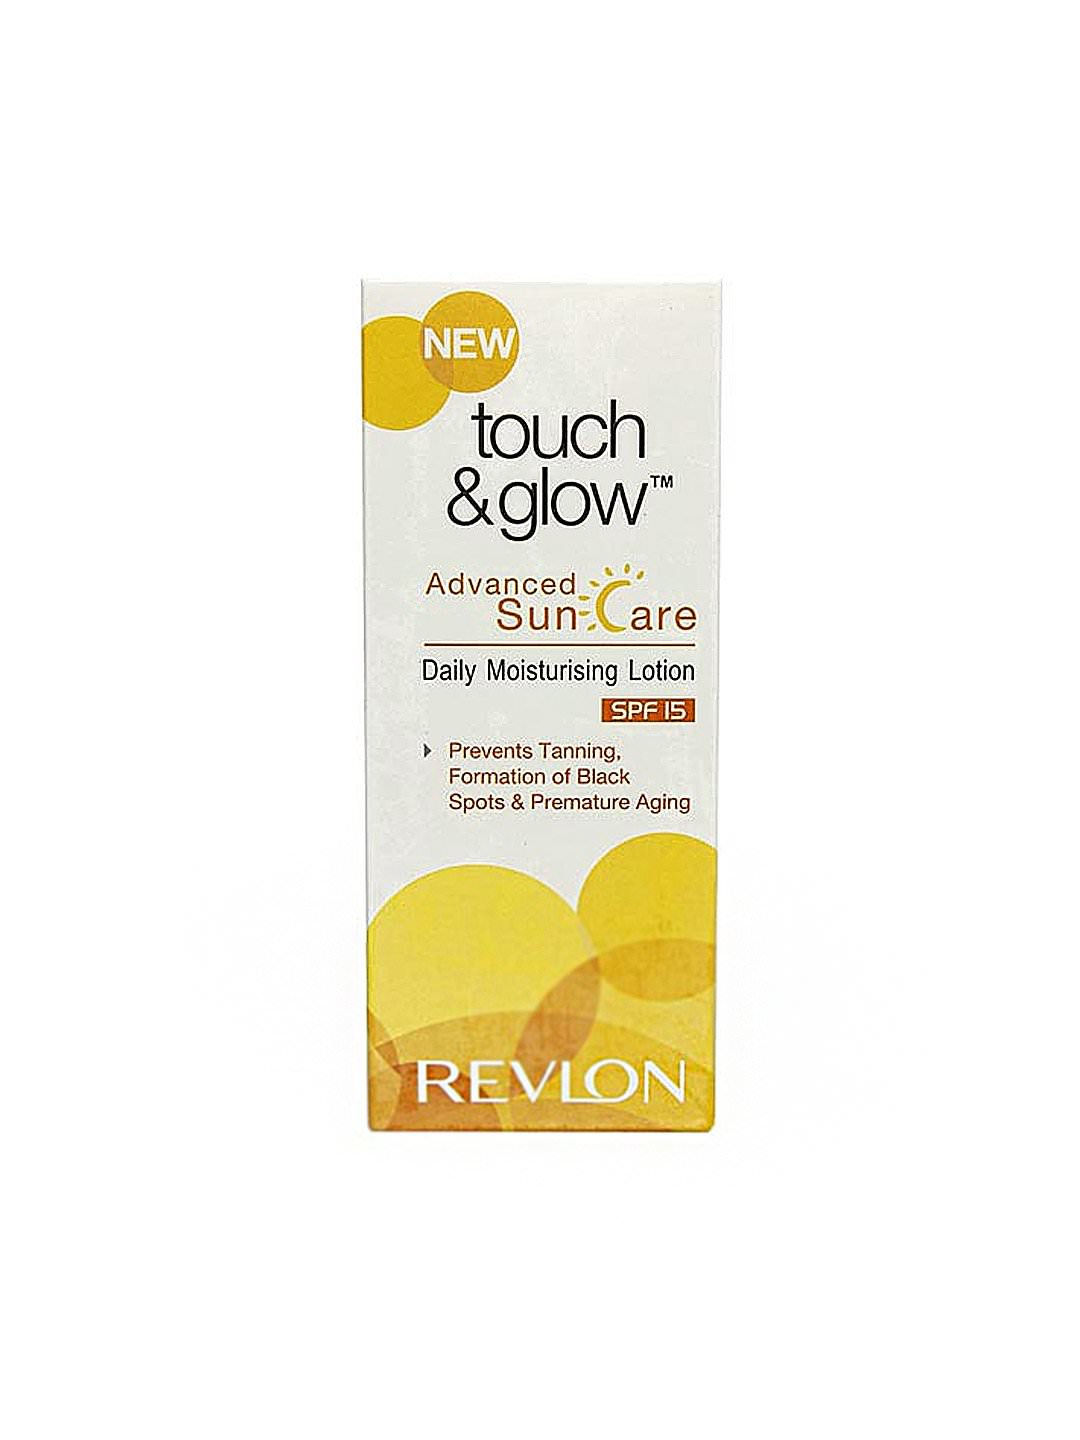 Revlon Touch & Glow Advanced Suncare Daily Moisturising Lotion SPF 15